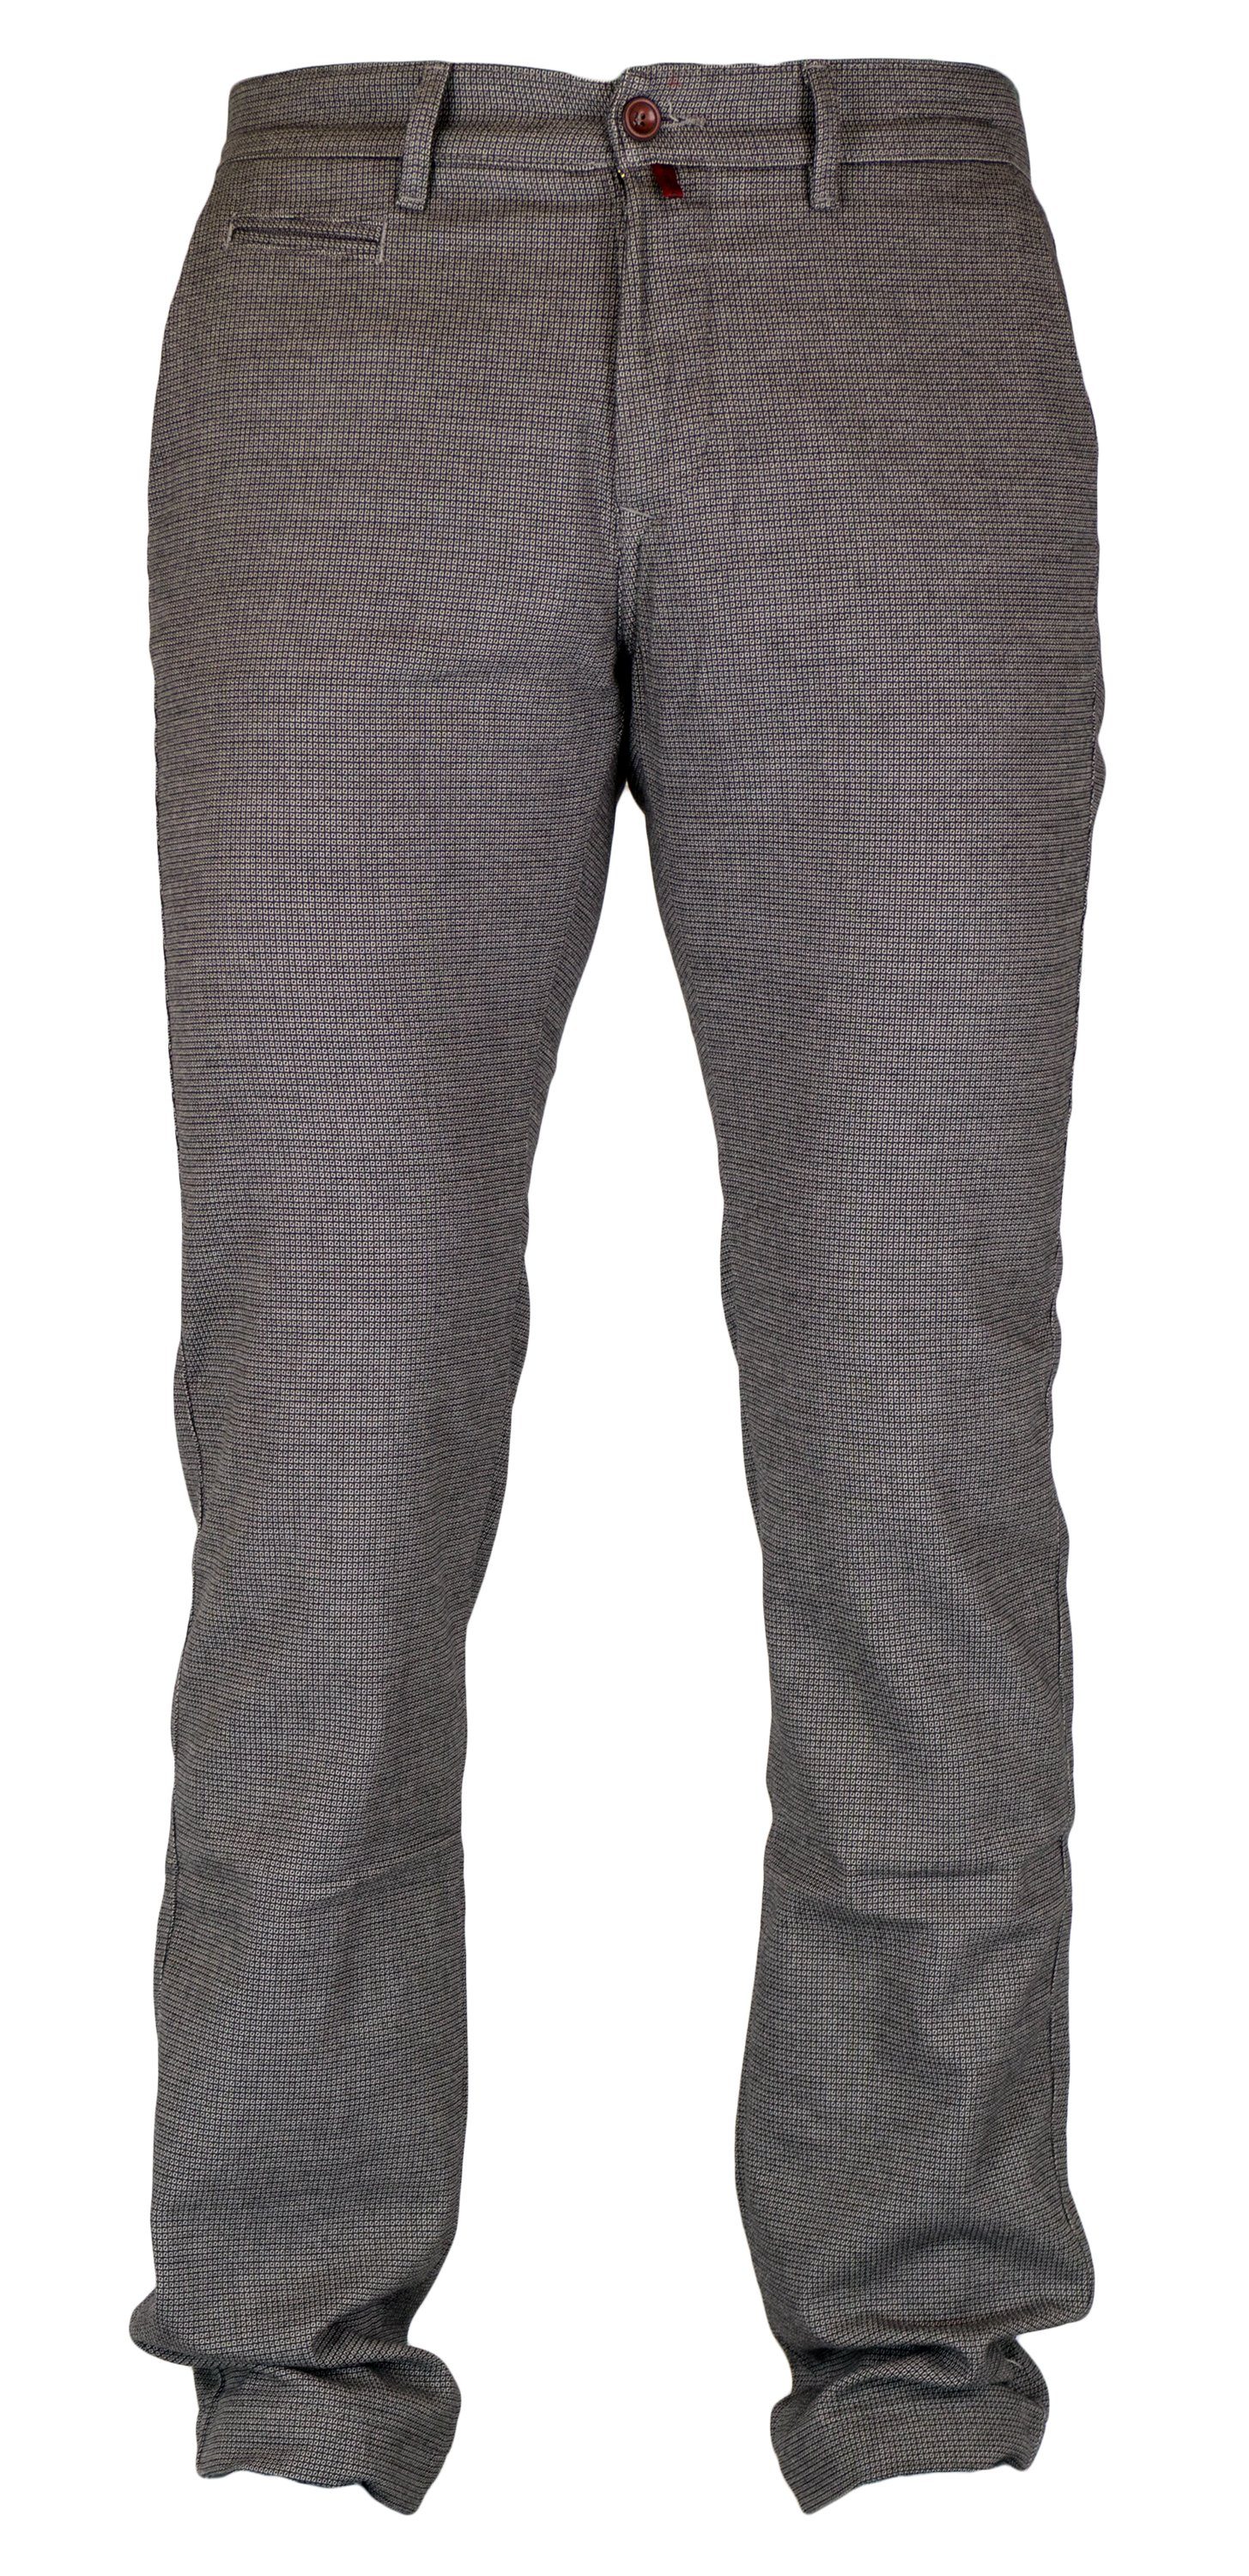 Pierre Cardin 5-Pocket-Jeans PIERRE CARDIN LYON mixed grey chino 33747 4738.25 - VOYAGE | Jeans